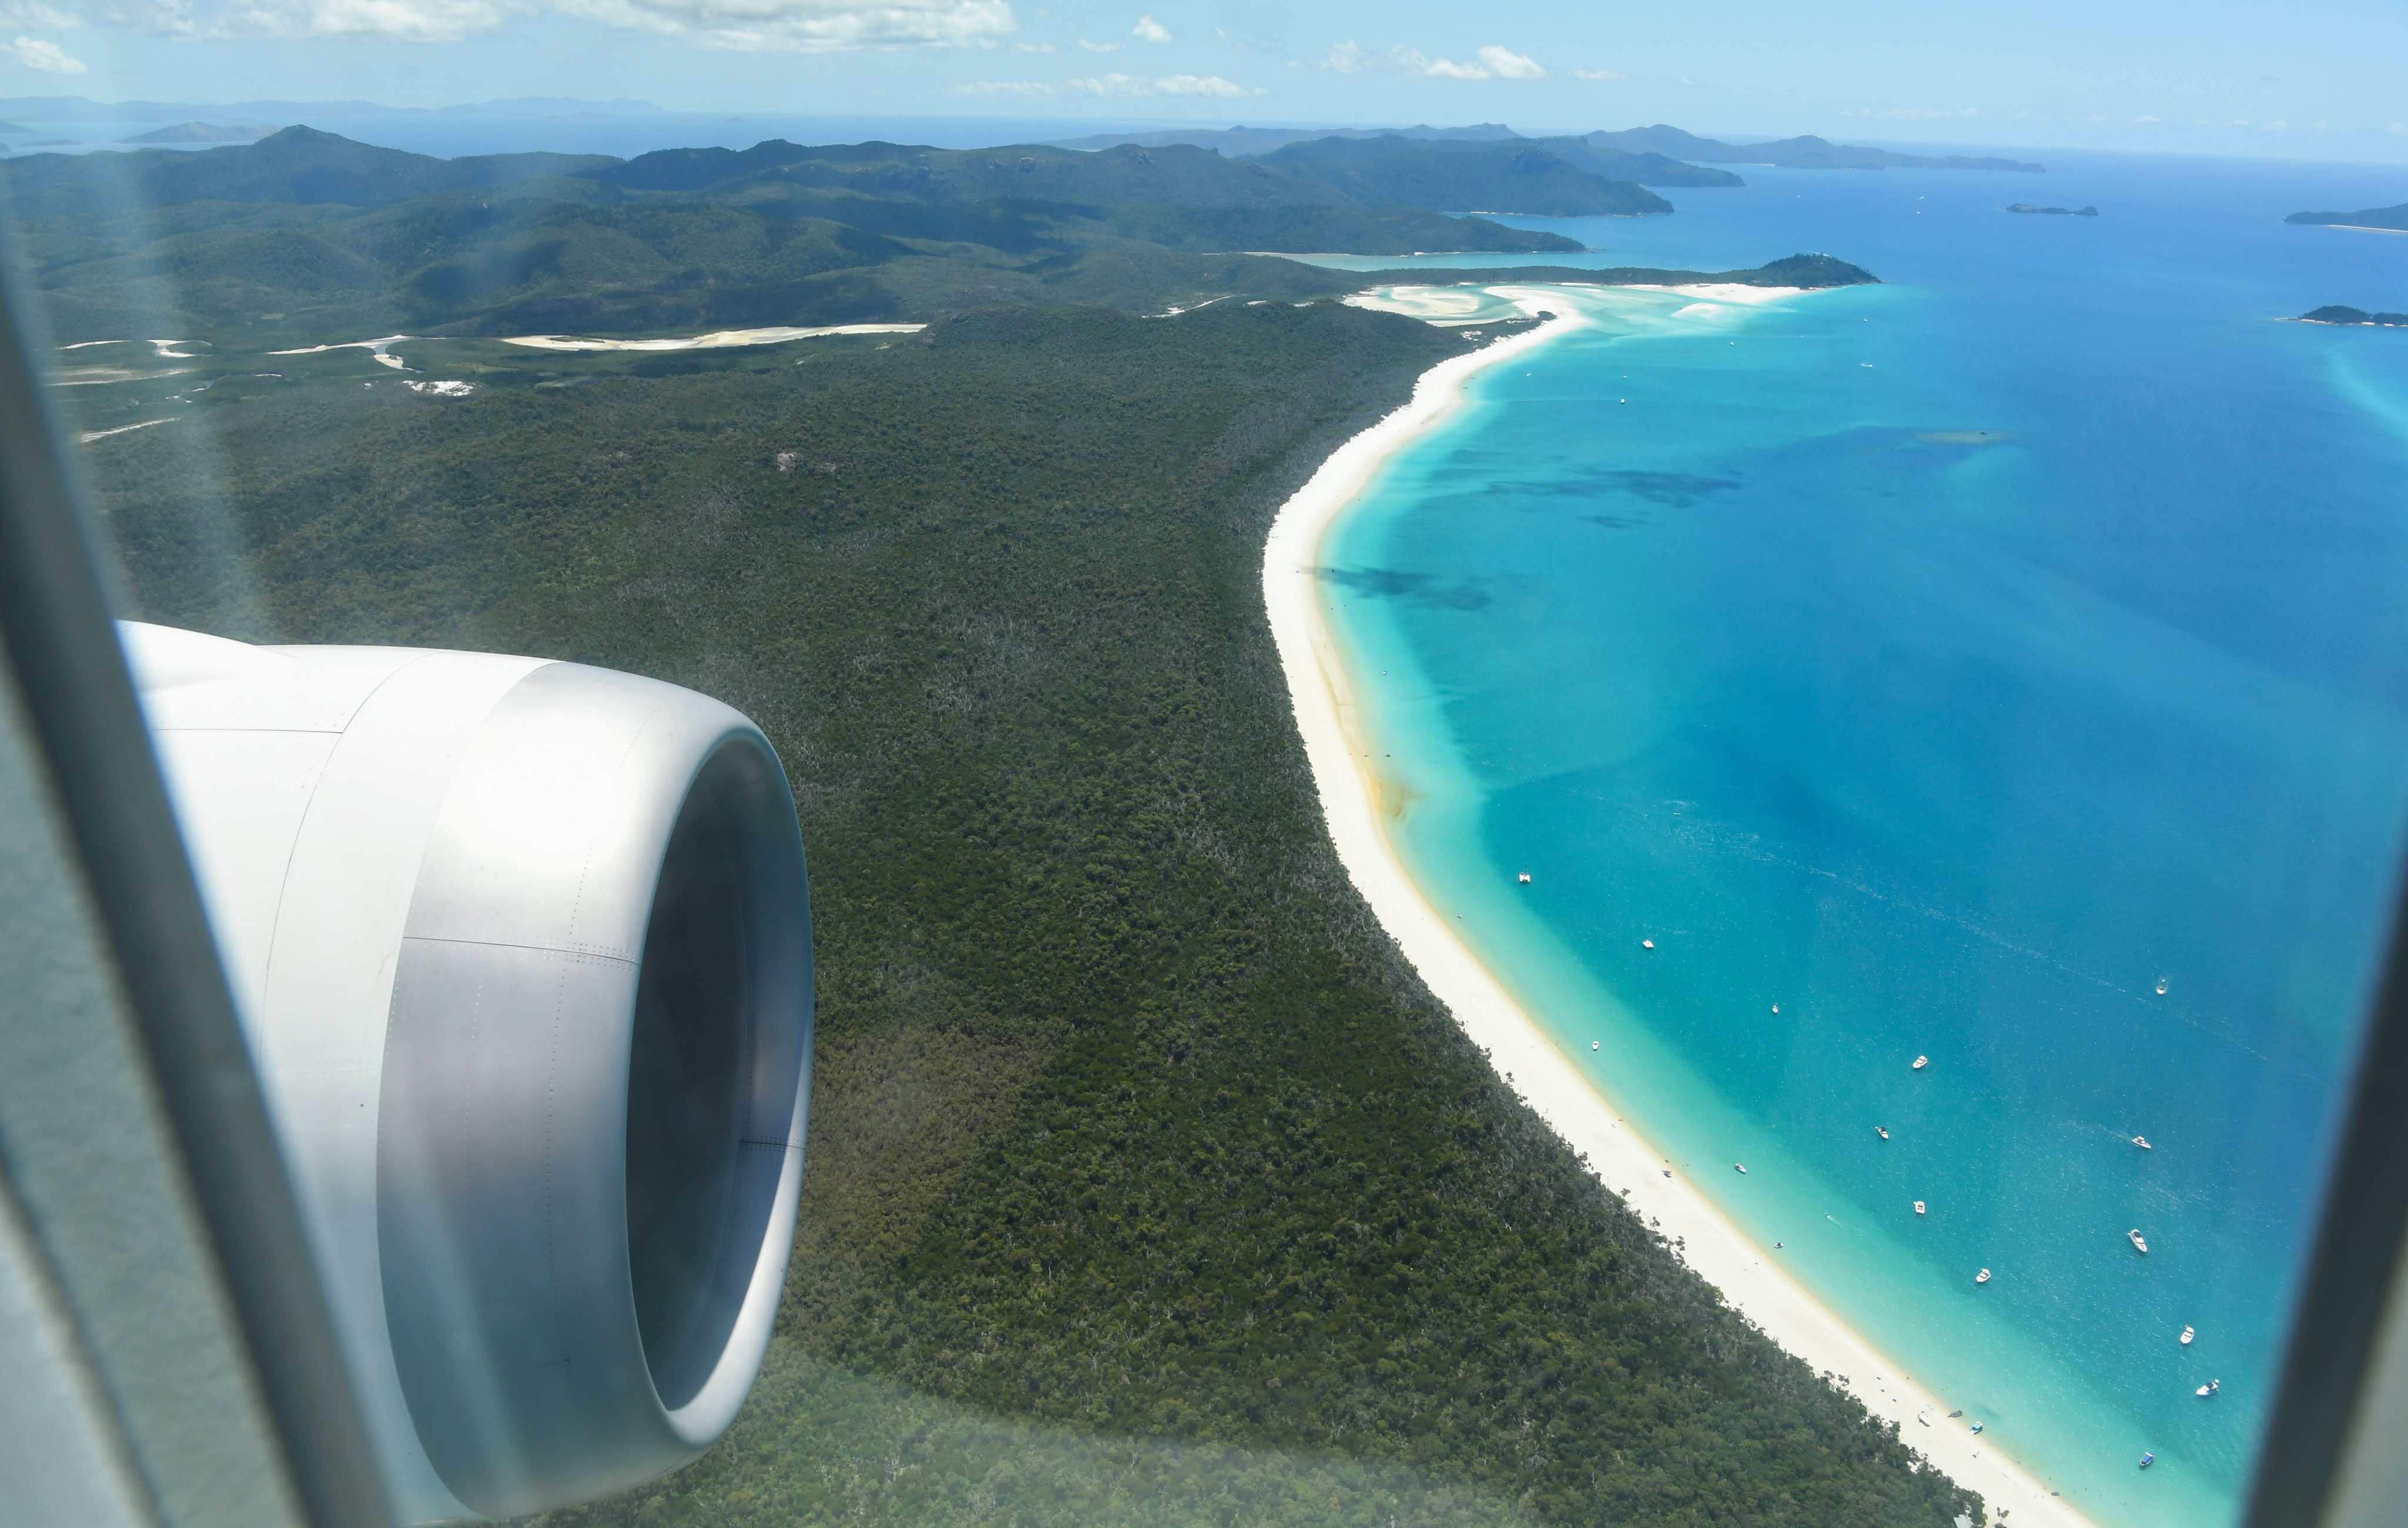 Sydney Travellers Enjoy Sights Of Australia Despite Border Closures On Qantas Scenic Flight